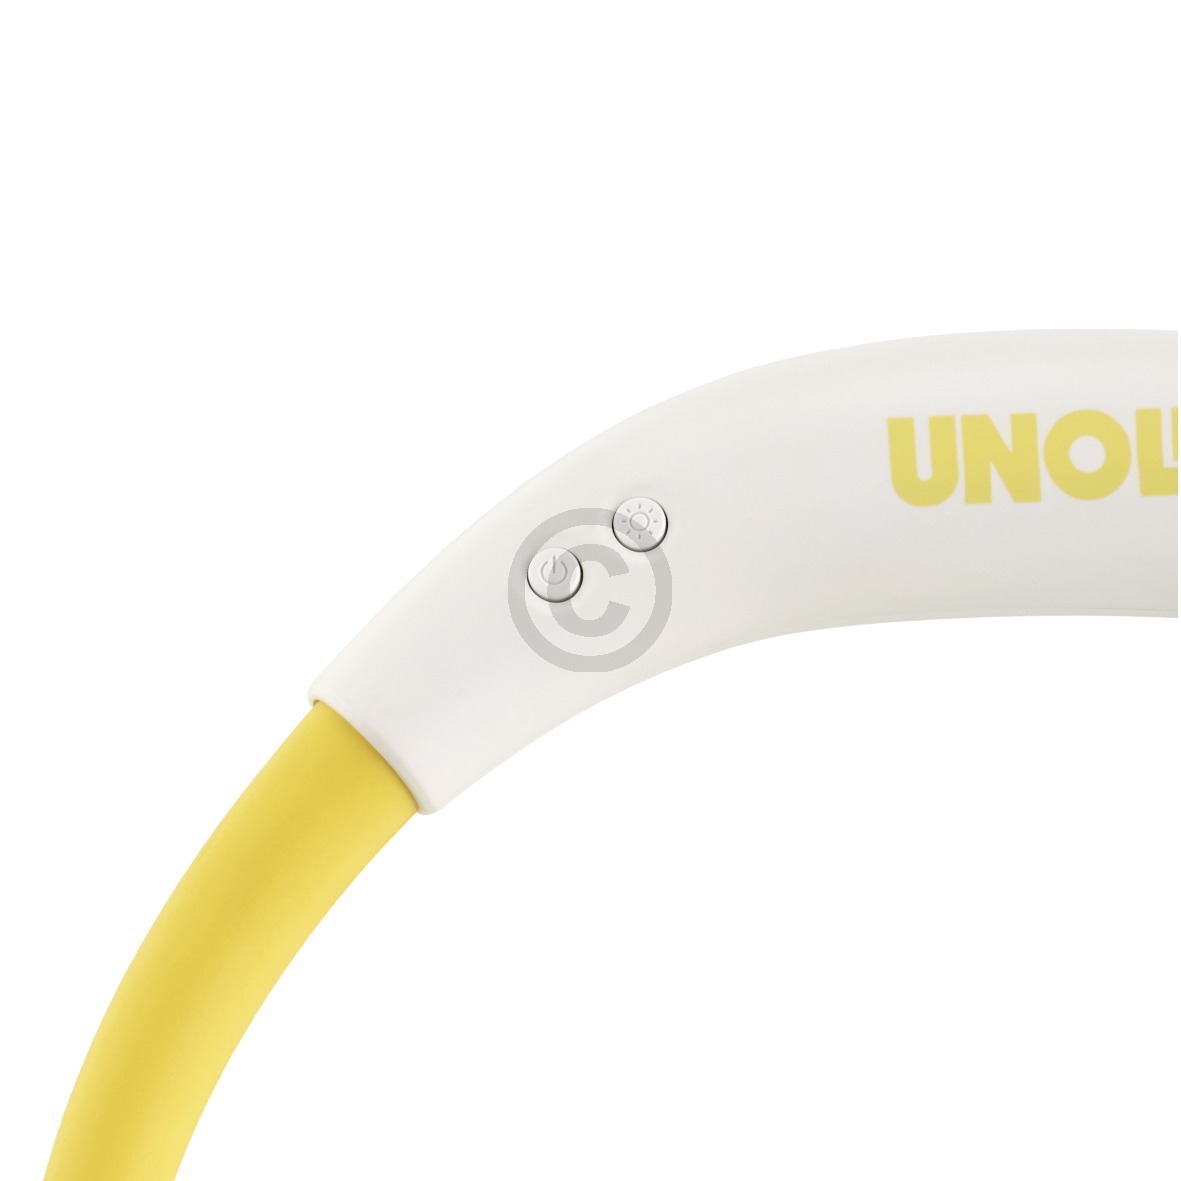 Nackenventilator UNOLD 86690 Breezy yellow mit Akku USB-Ladekabel